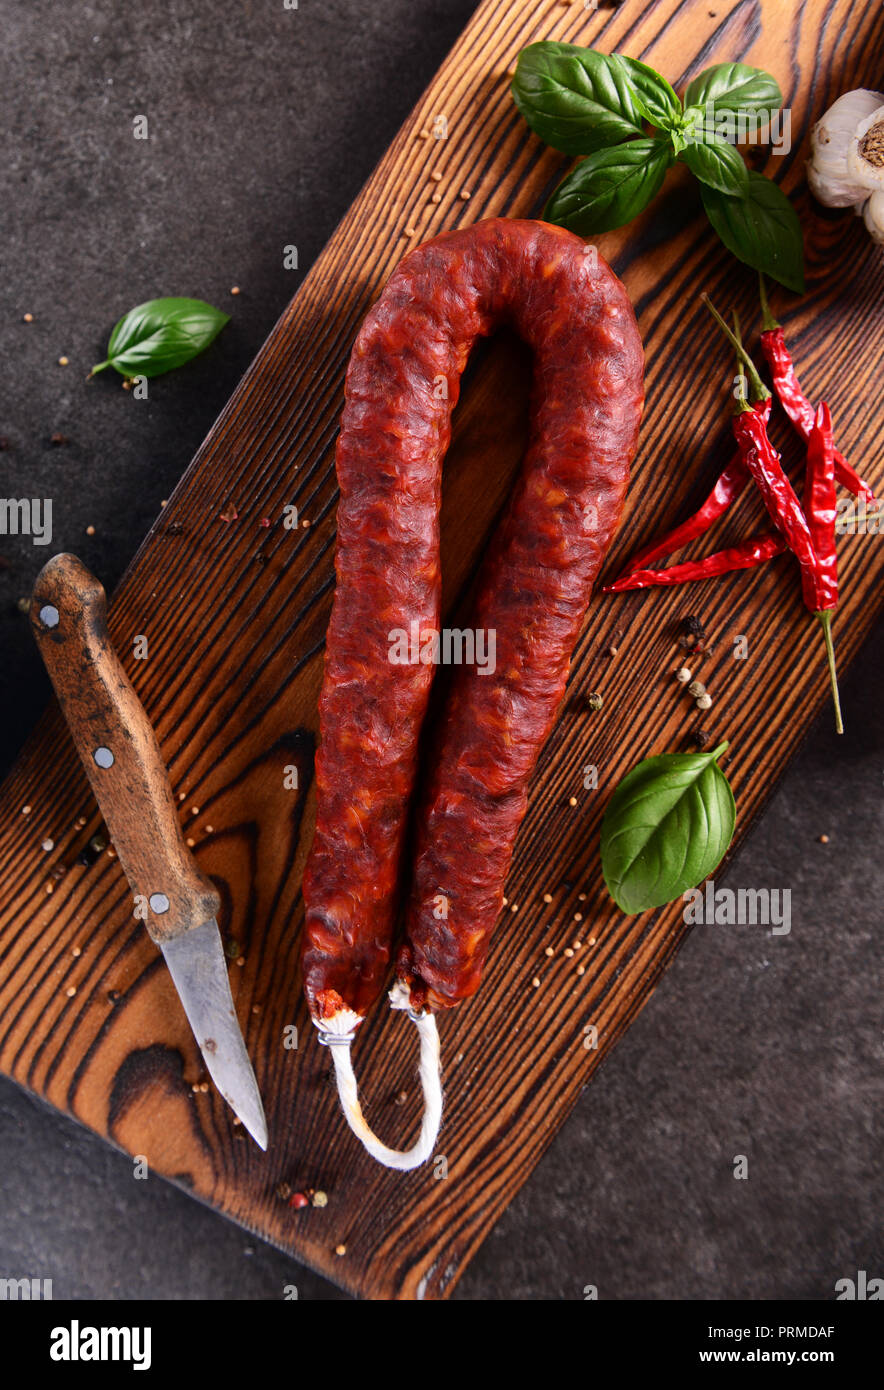 Traditional spanish sausage - chorizo Stock Photo